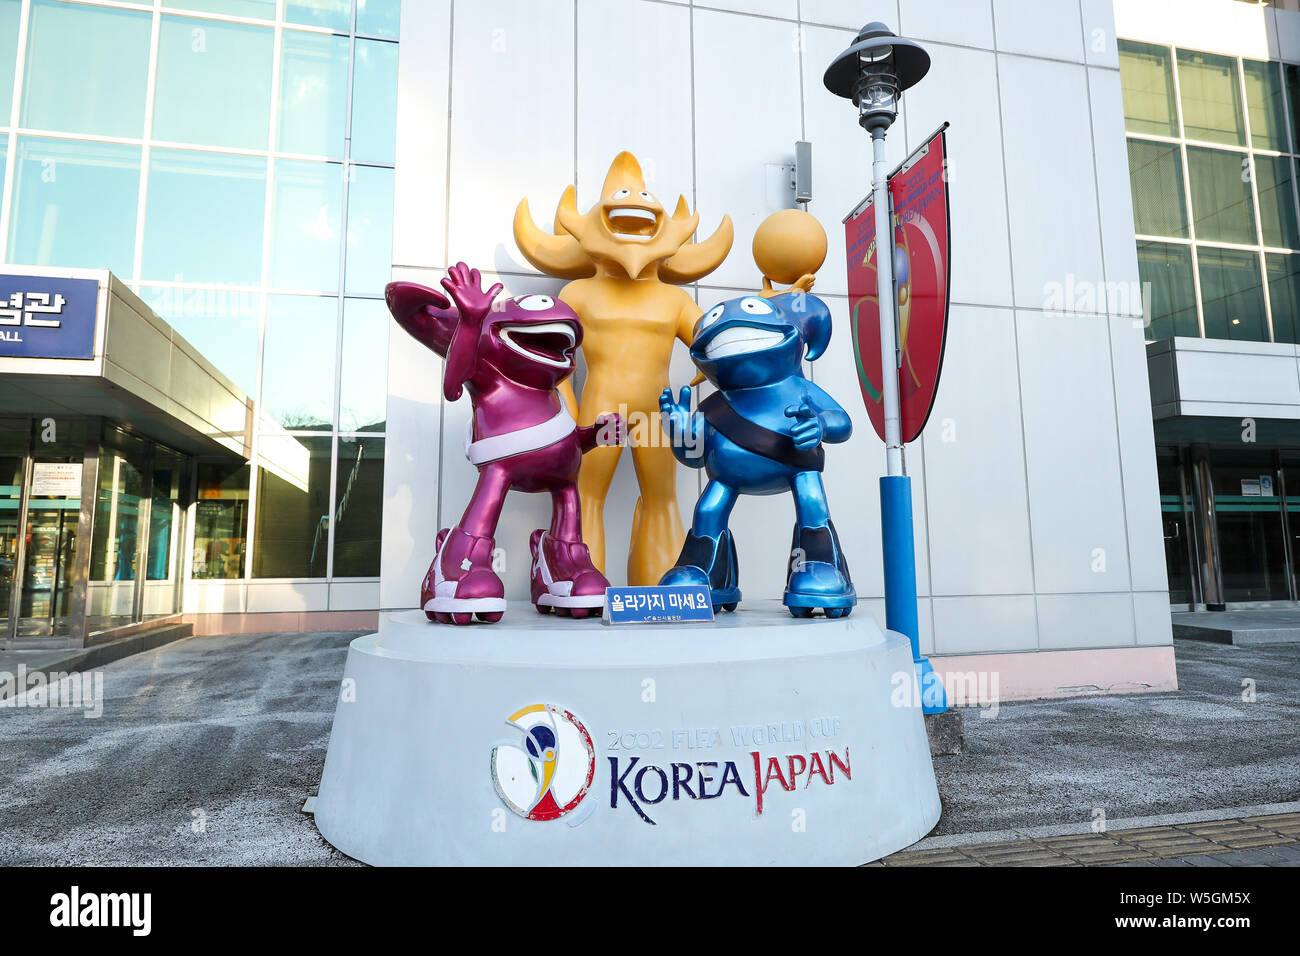 View Of The Official Mascot Atmozone Of The 02 Fifa World Cup Korea Japan At The Ulsan Munsu Football Stadium In Ulsan South Korea 13 March 19 Stock Photo Alamy